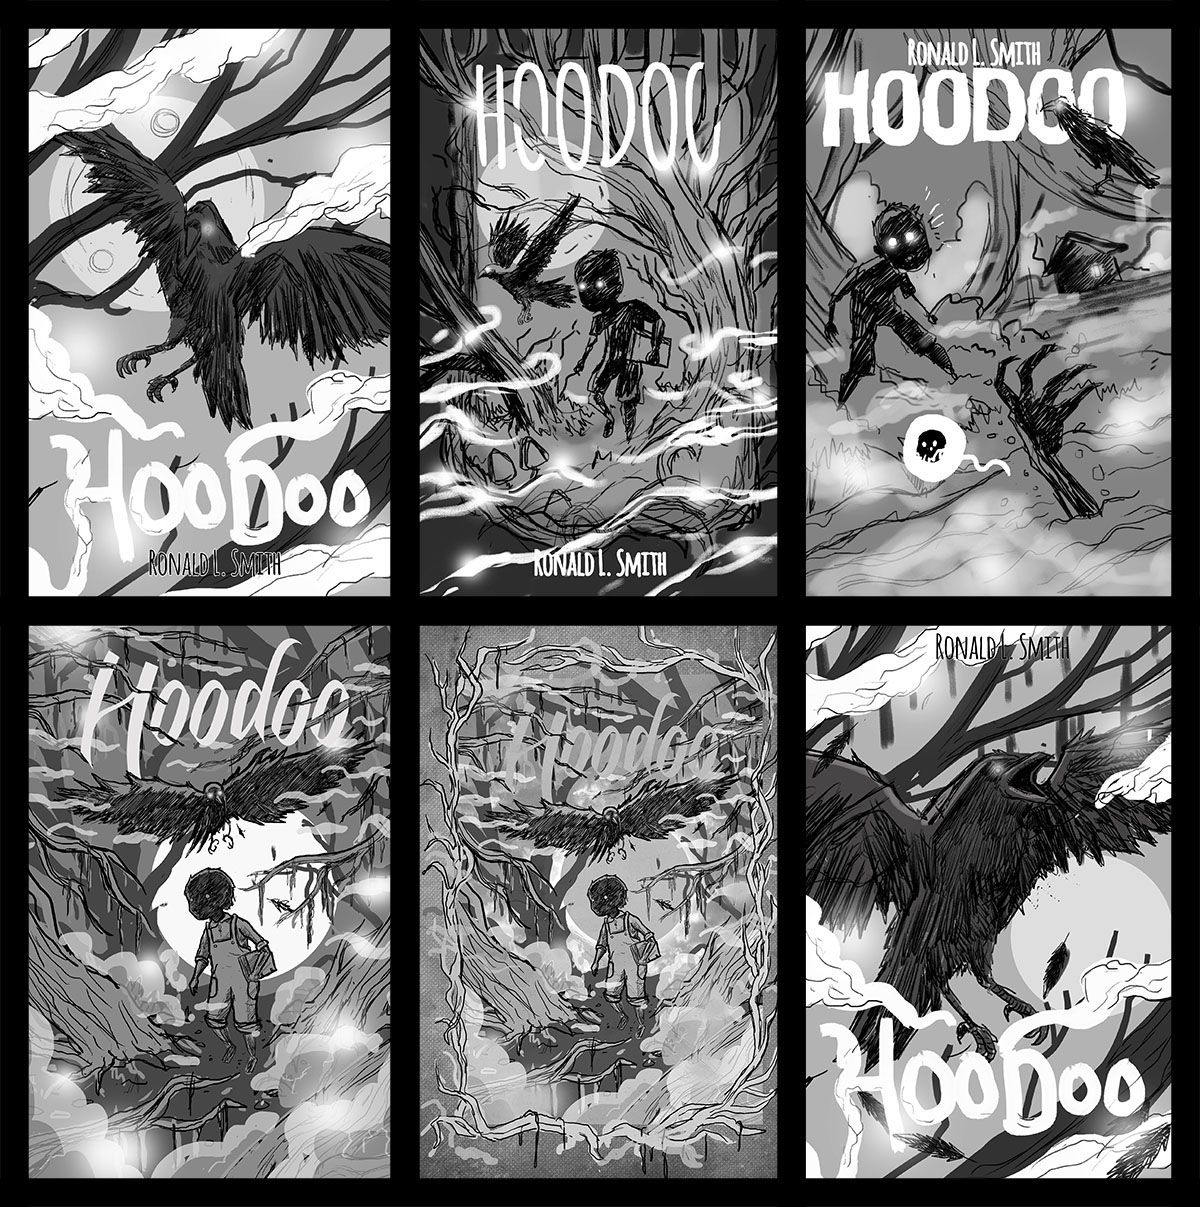 book cover children crow voodoo creepy spooky woods dark boy story jacket